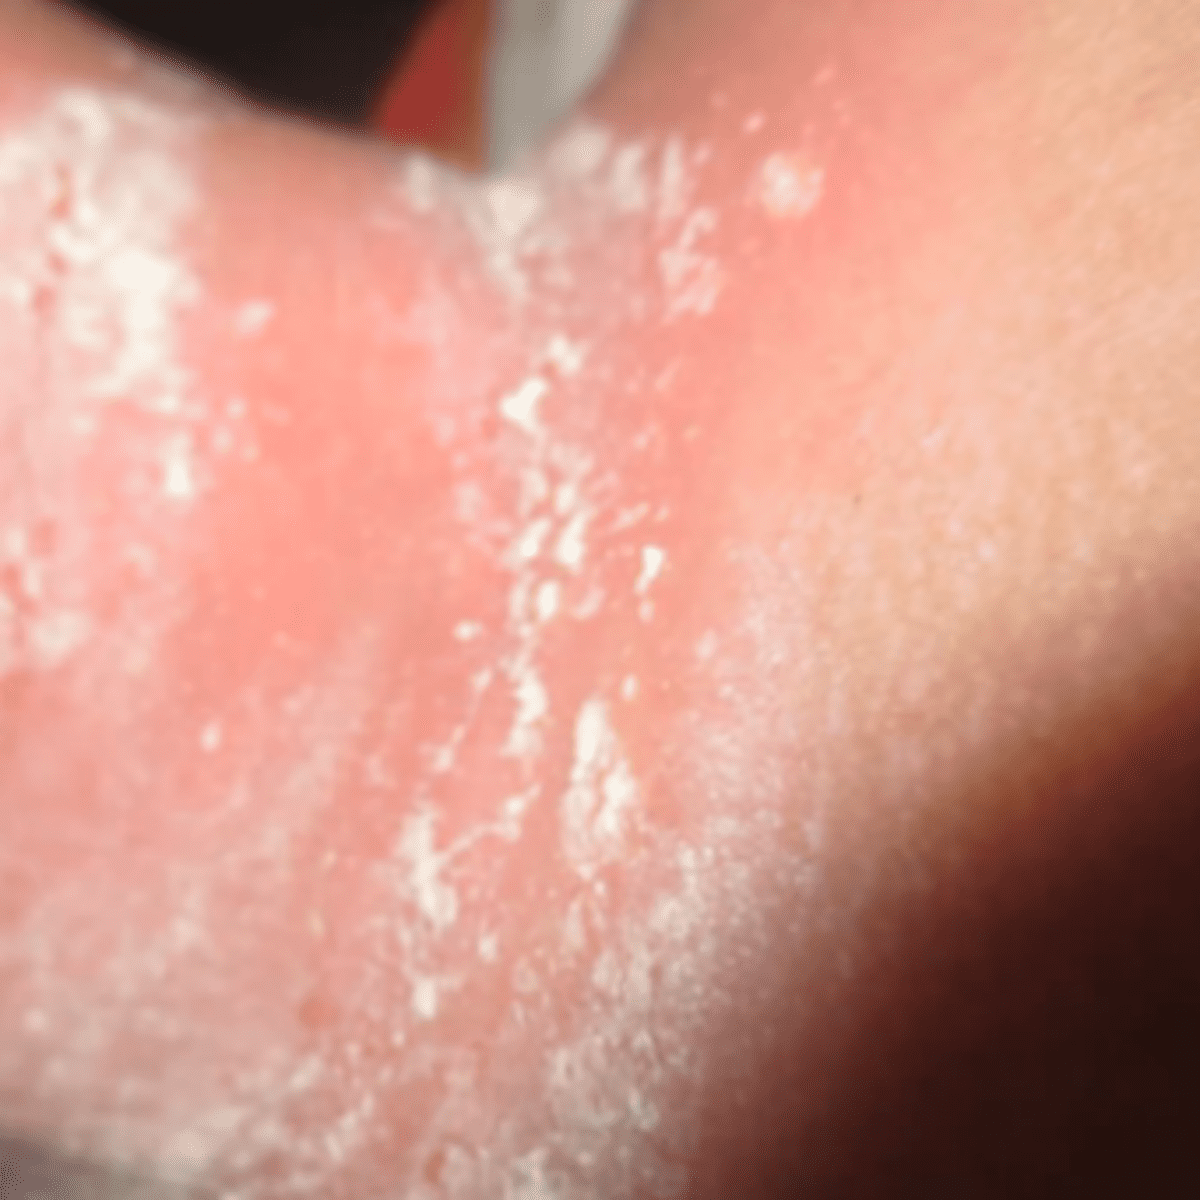 Intertrigo rash under elderly woman's breast - Stock Image - M180